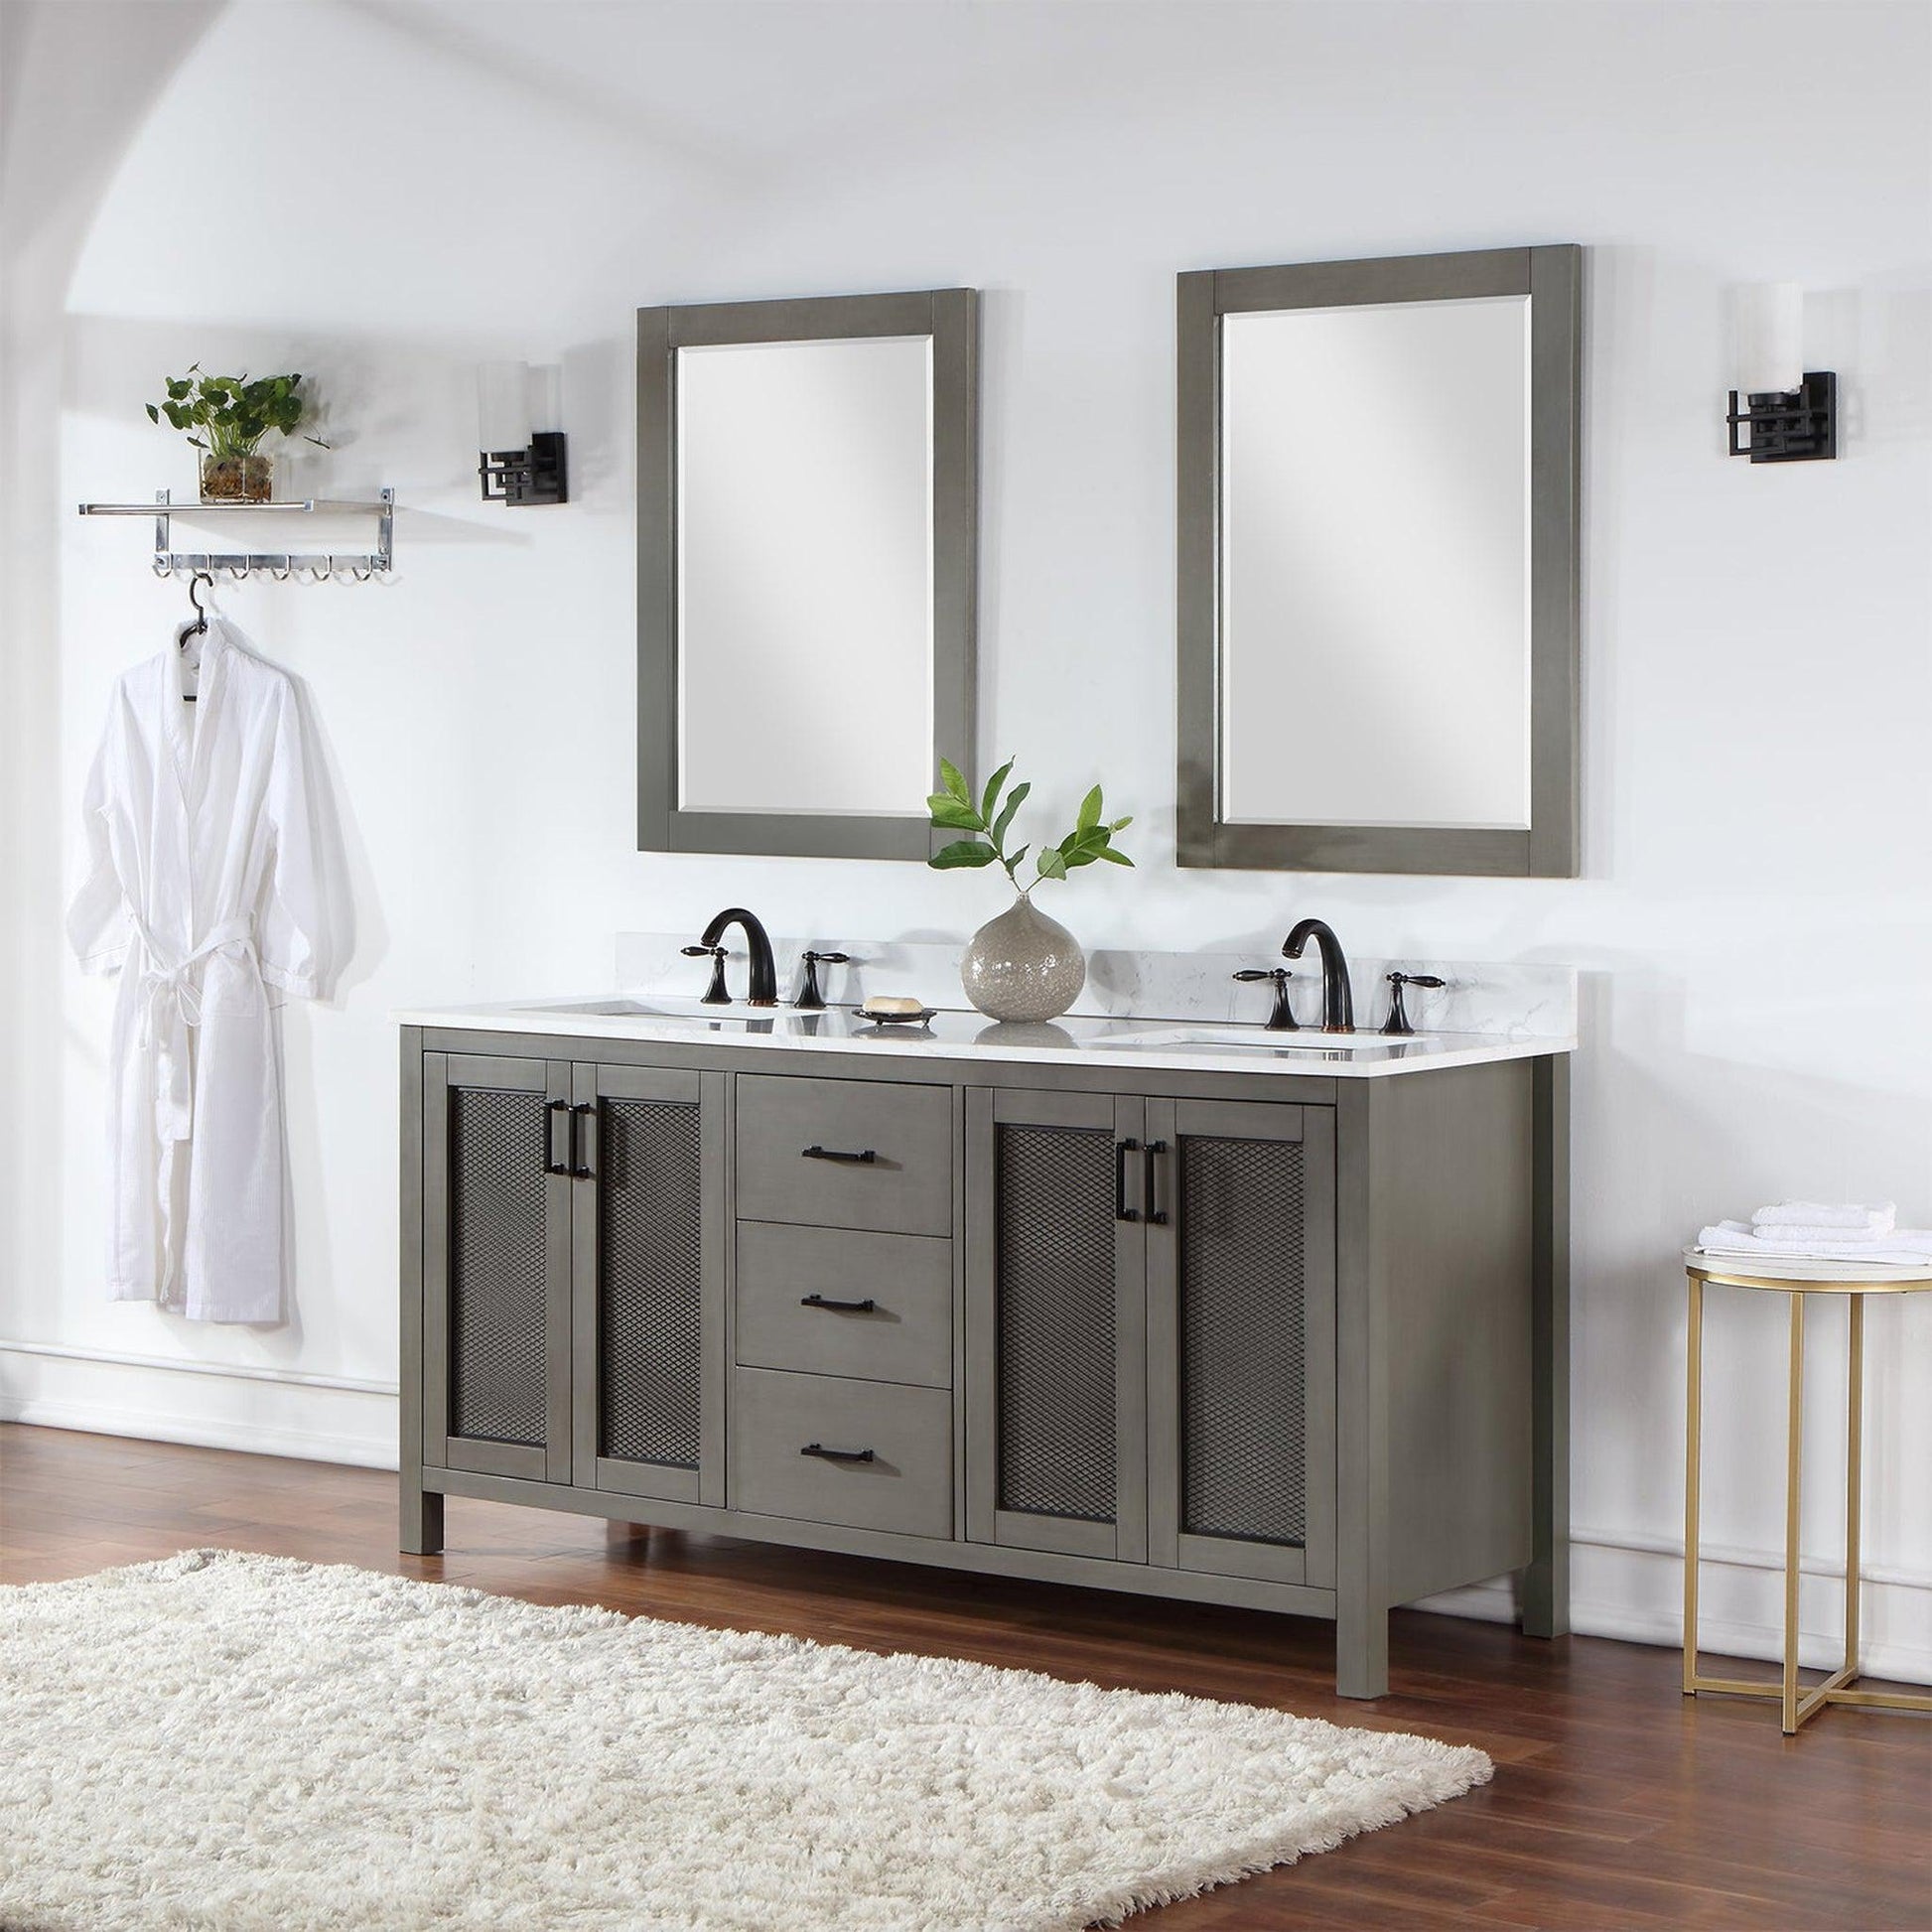 Altair Hadiya 72" Double Gray Pine Freestanding Bathroom Vanity Set With Mirror, Elegant Aosta White Composite Stone Top, Two Rectangular Undermount Ceramic Sinks, Overflow, and Backsplash